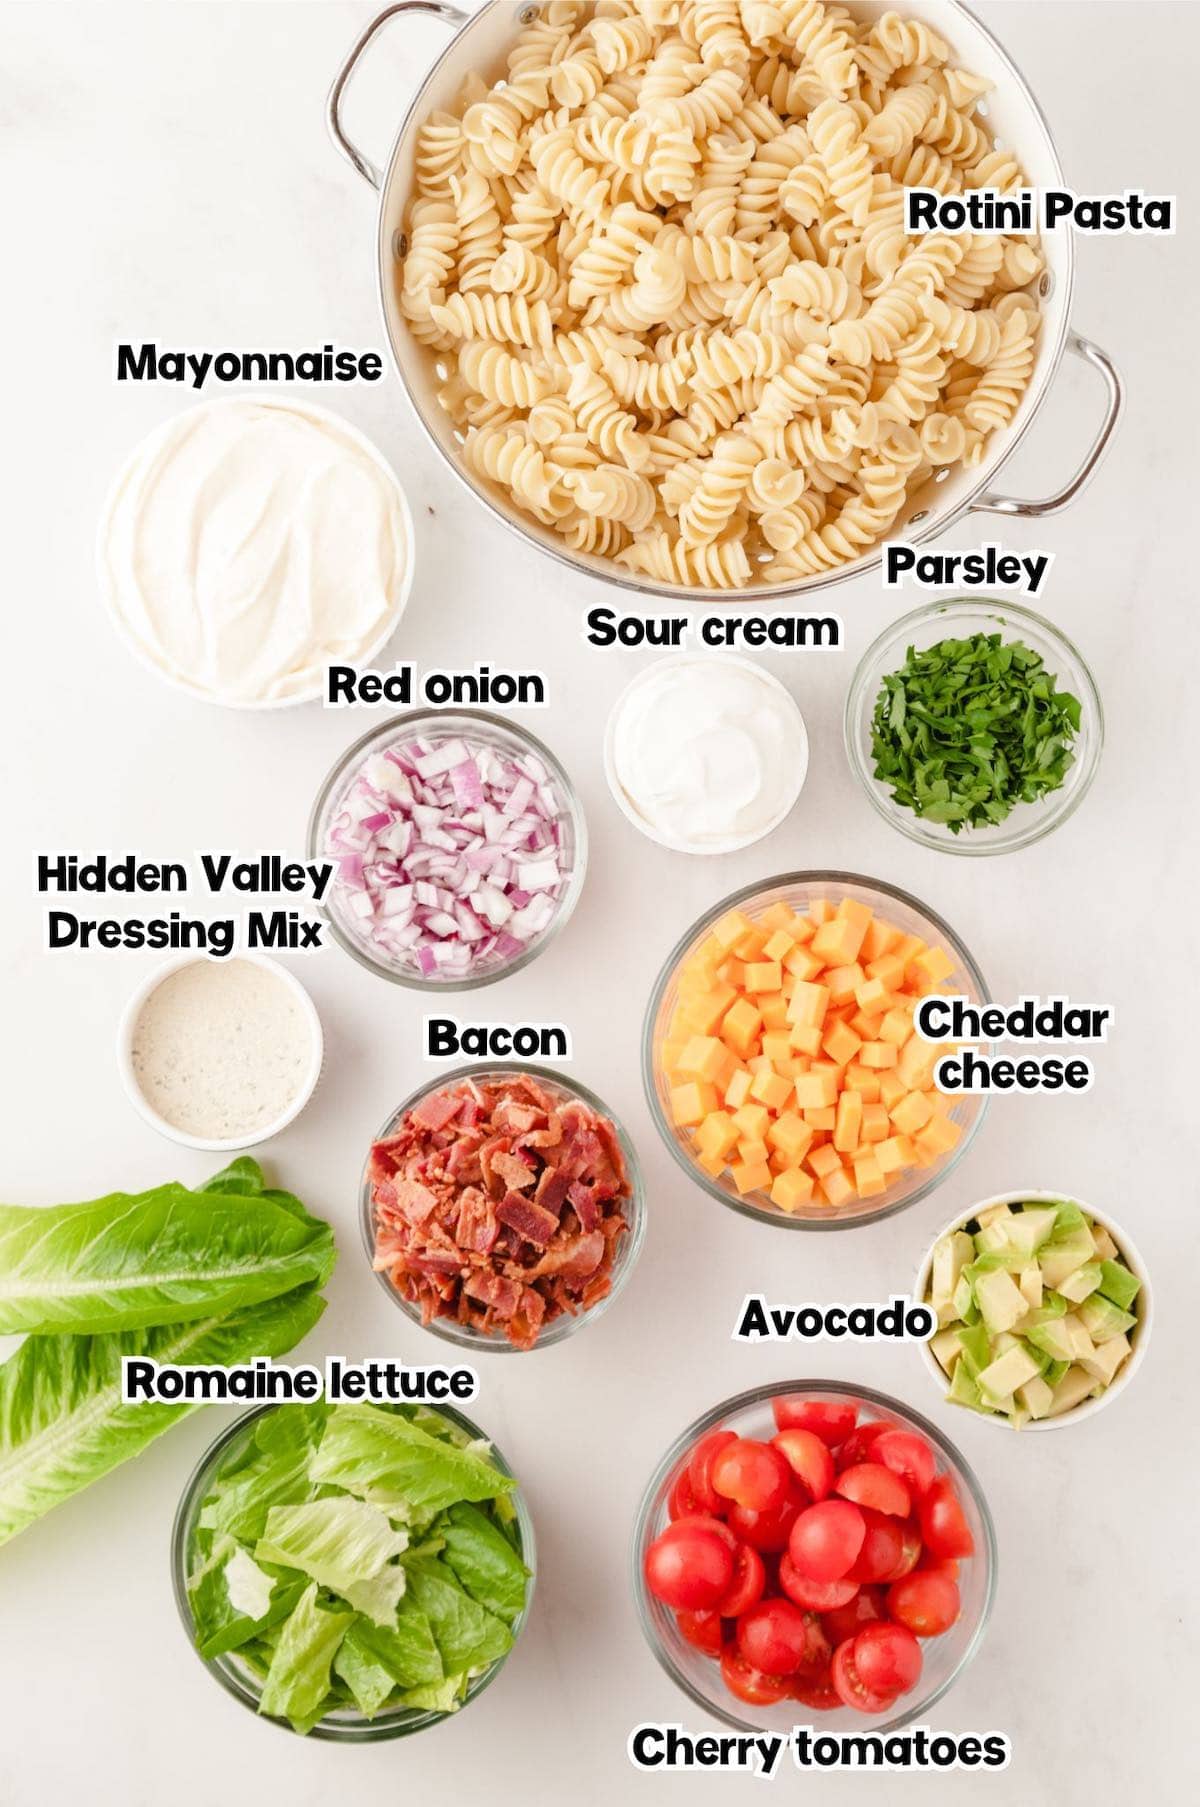 blt pasta salad ingredients.